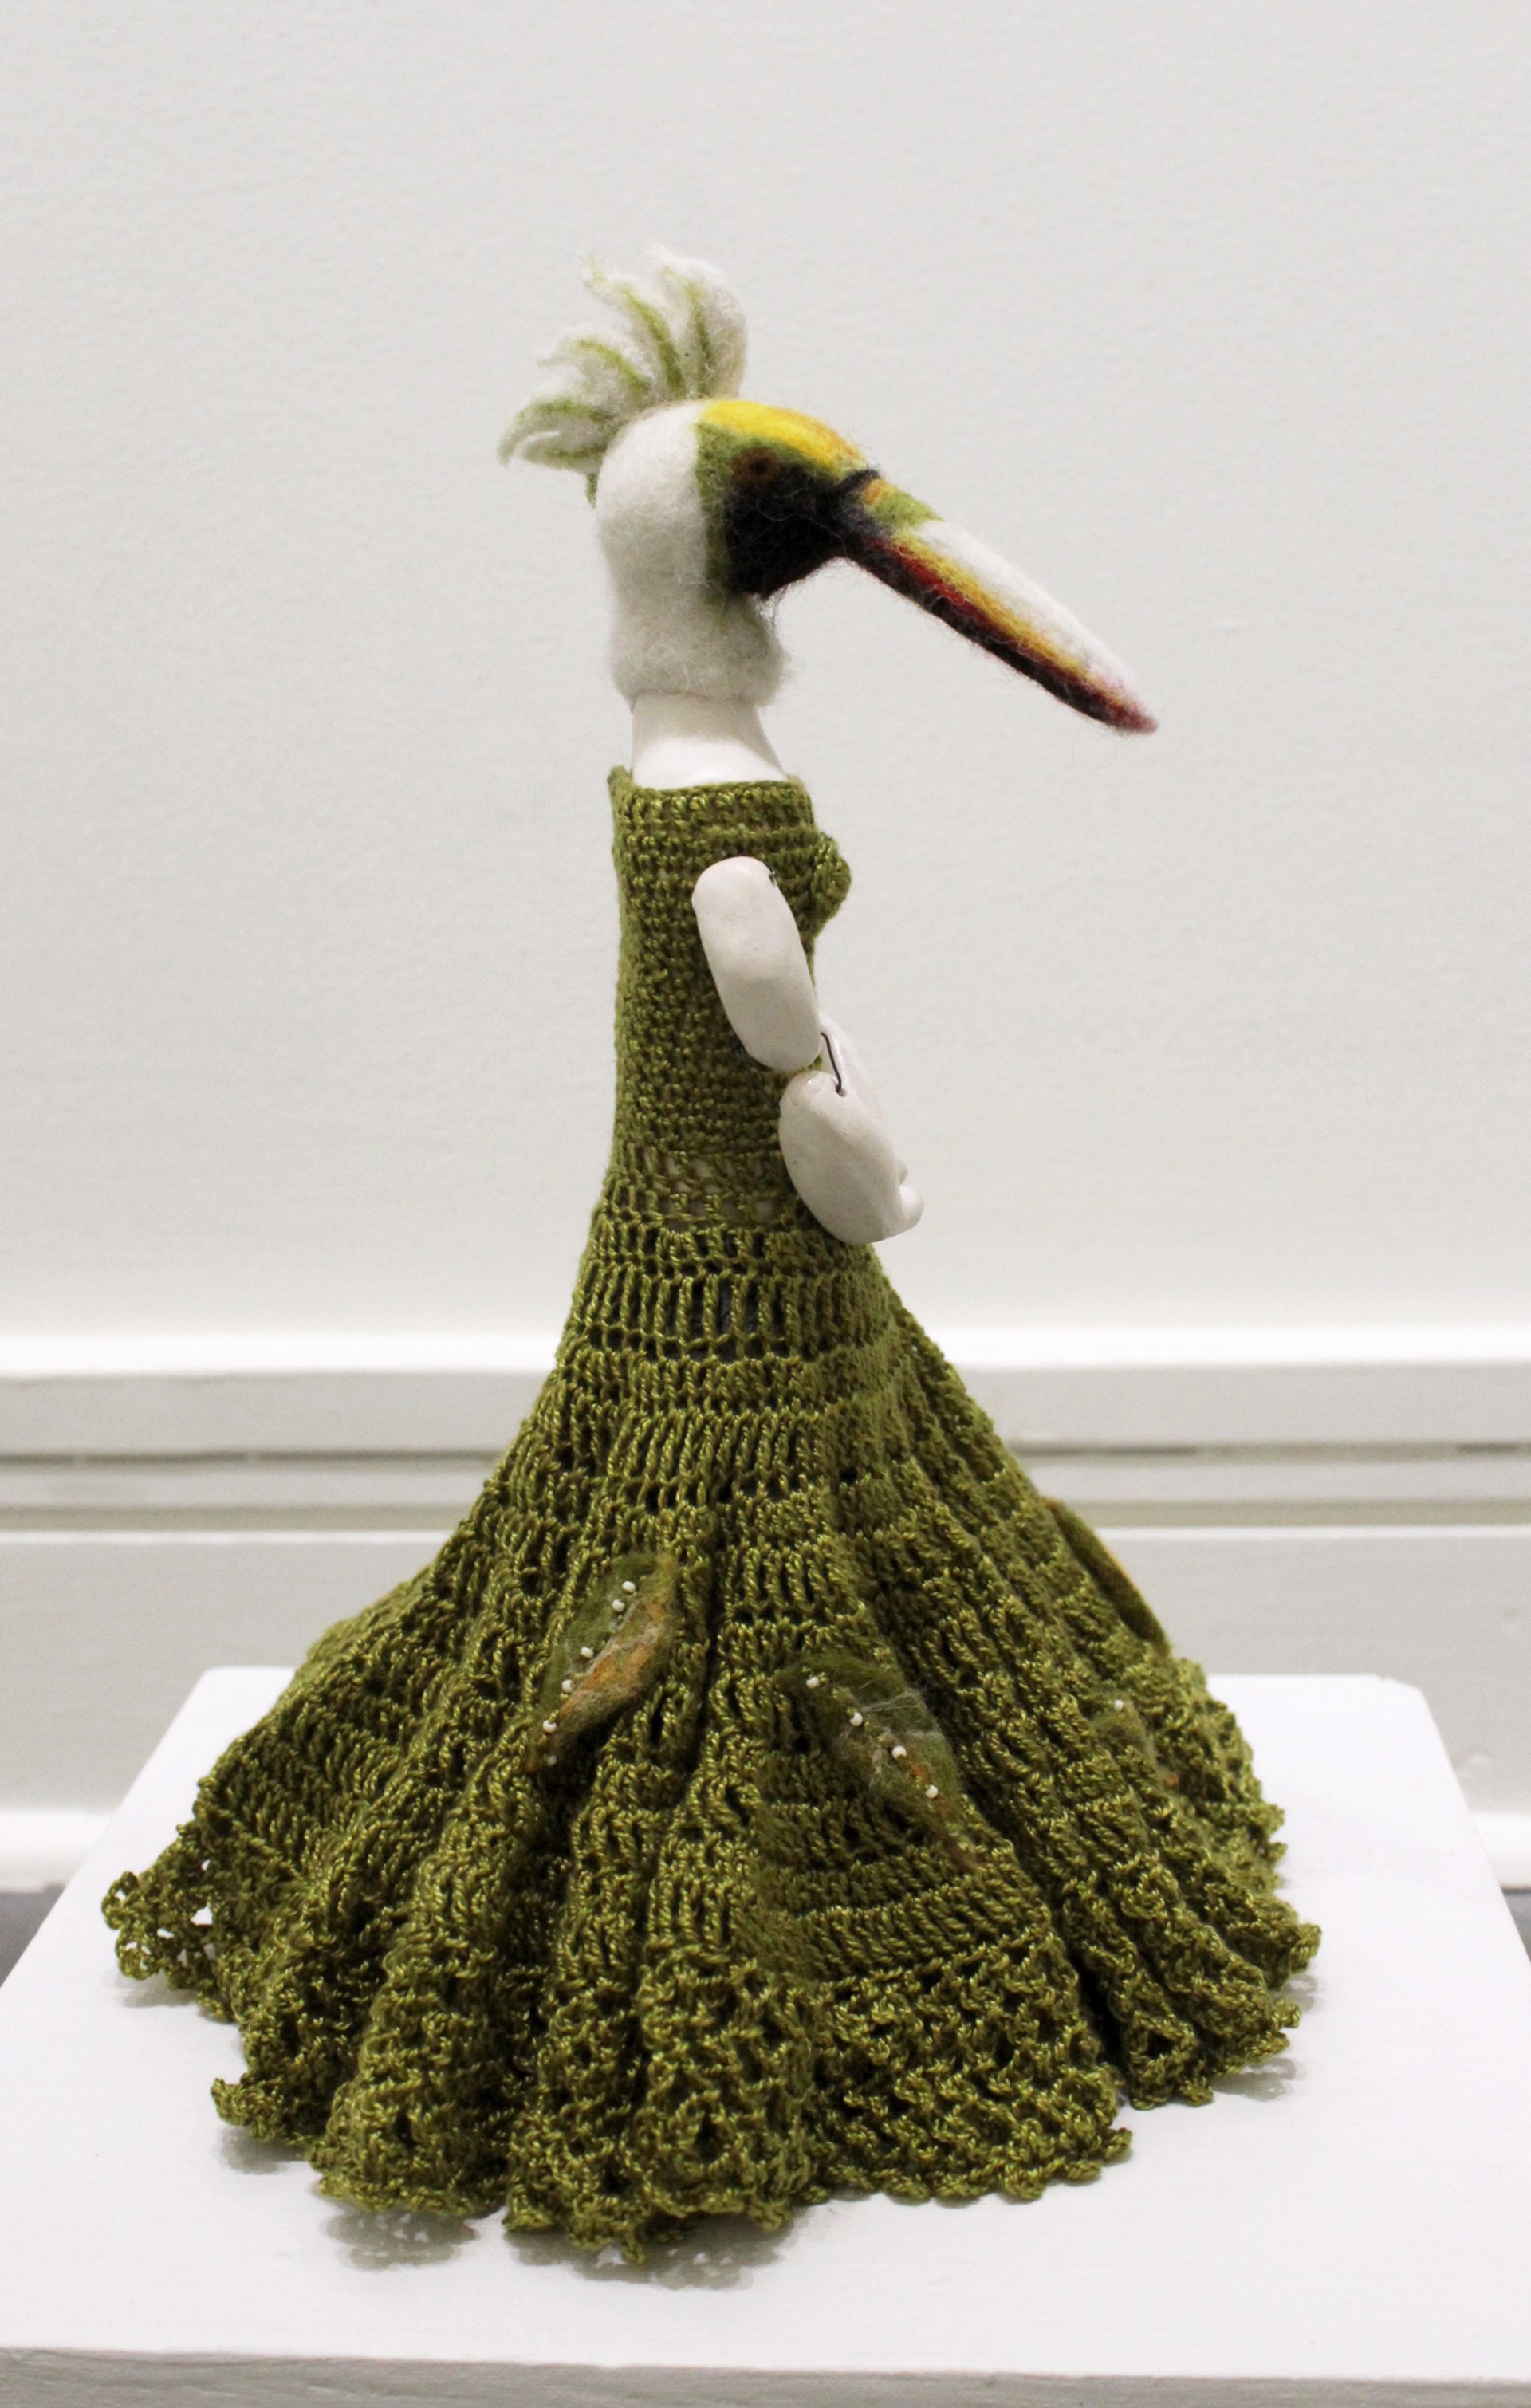 Untitled (standing bird in green dress) by Eva Maier